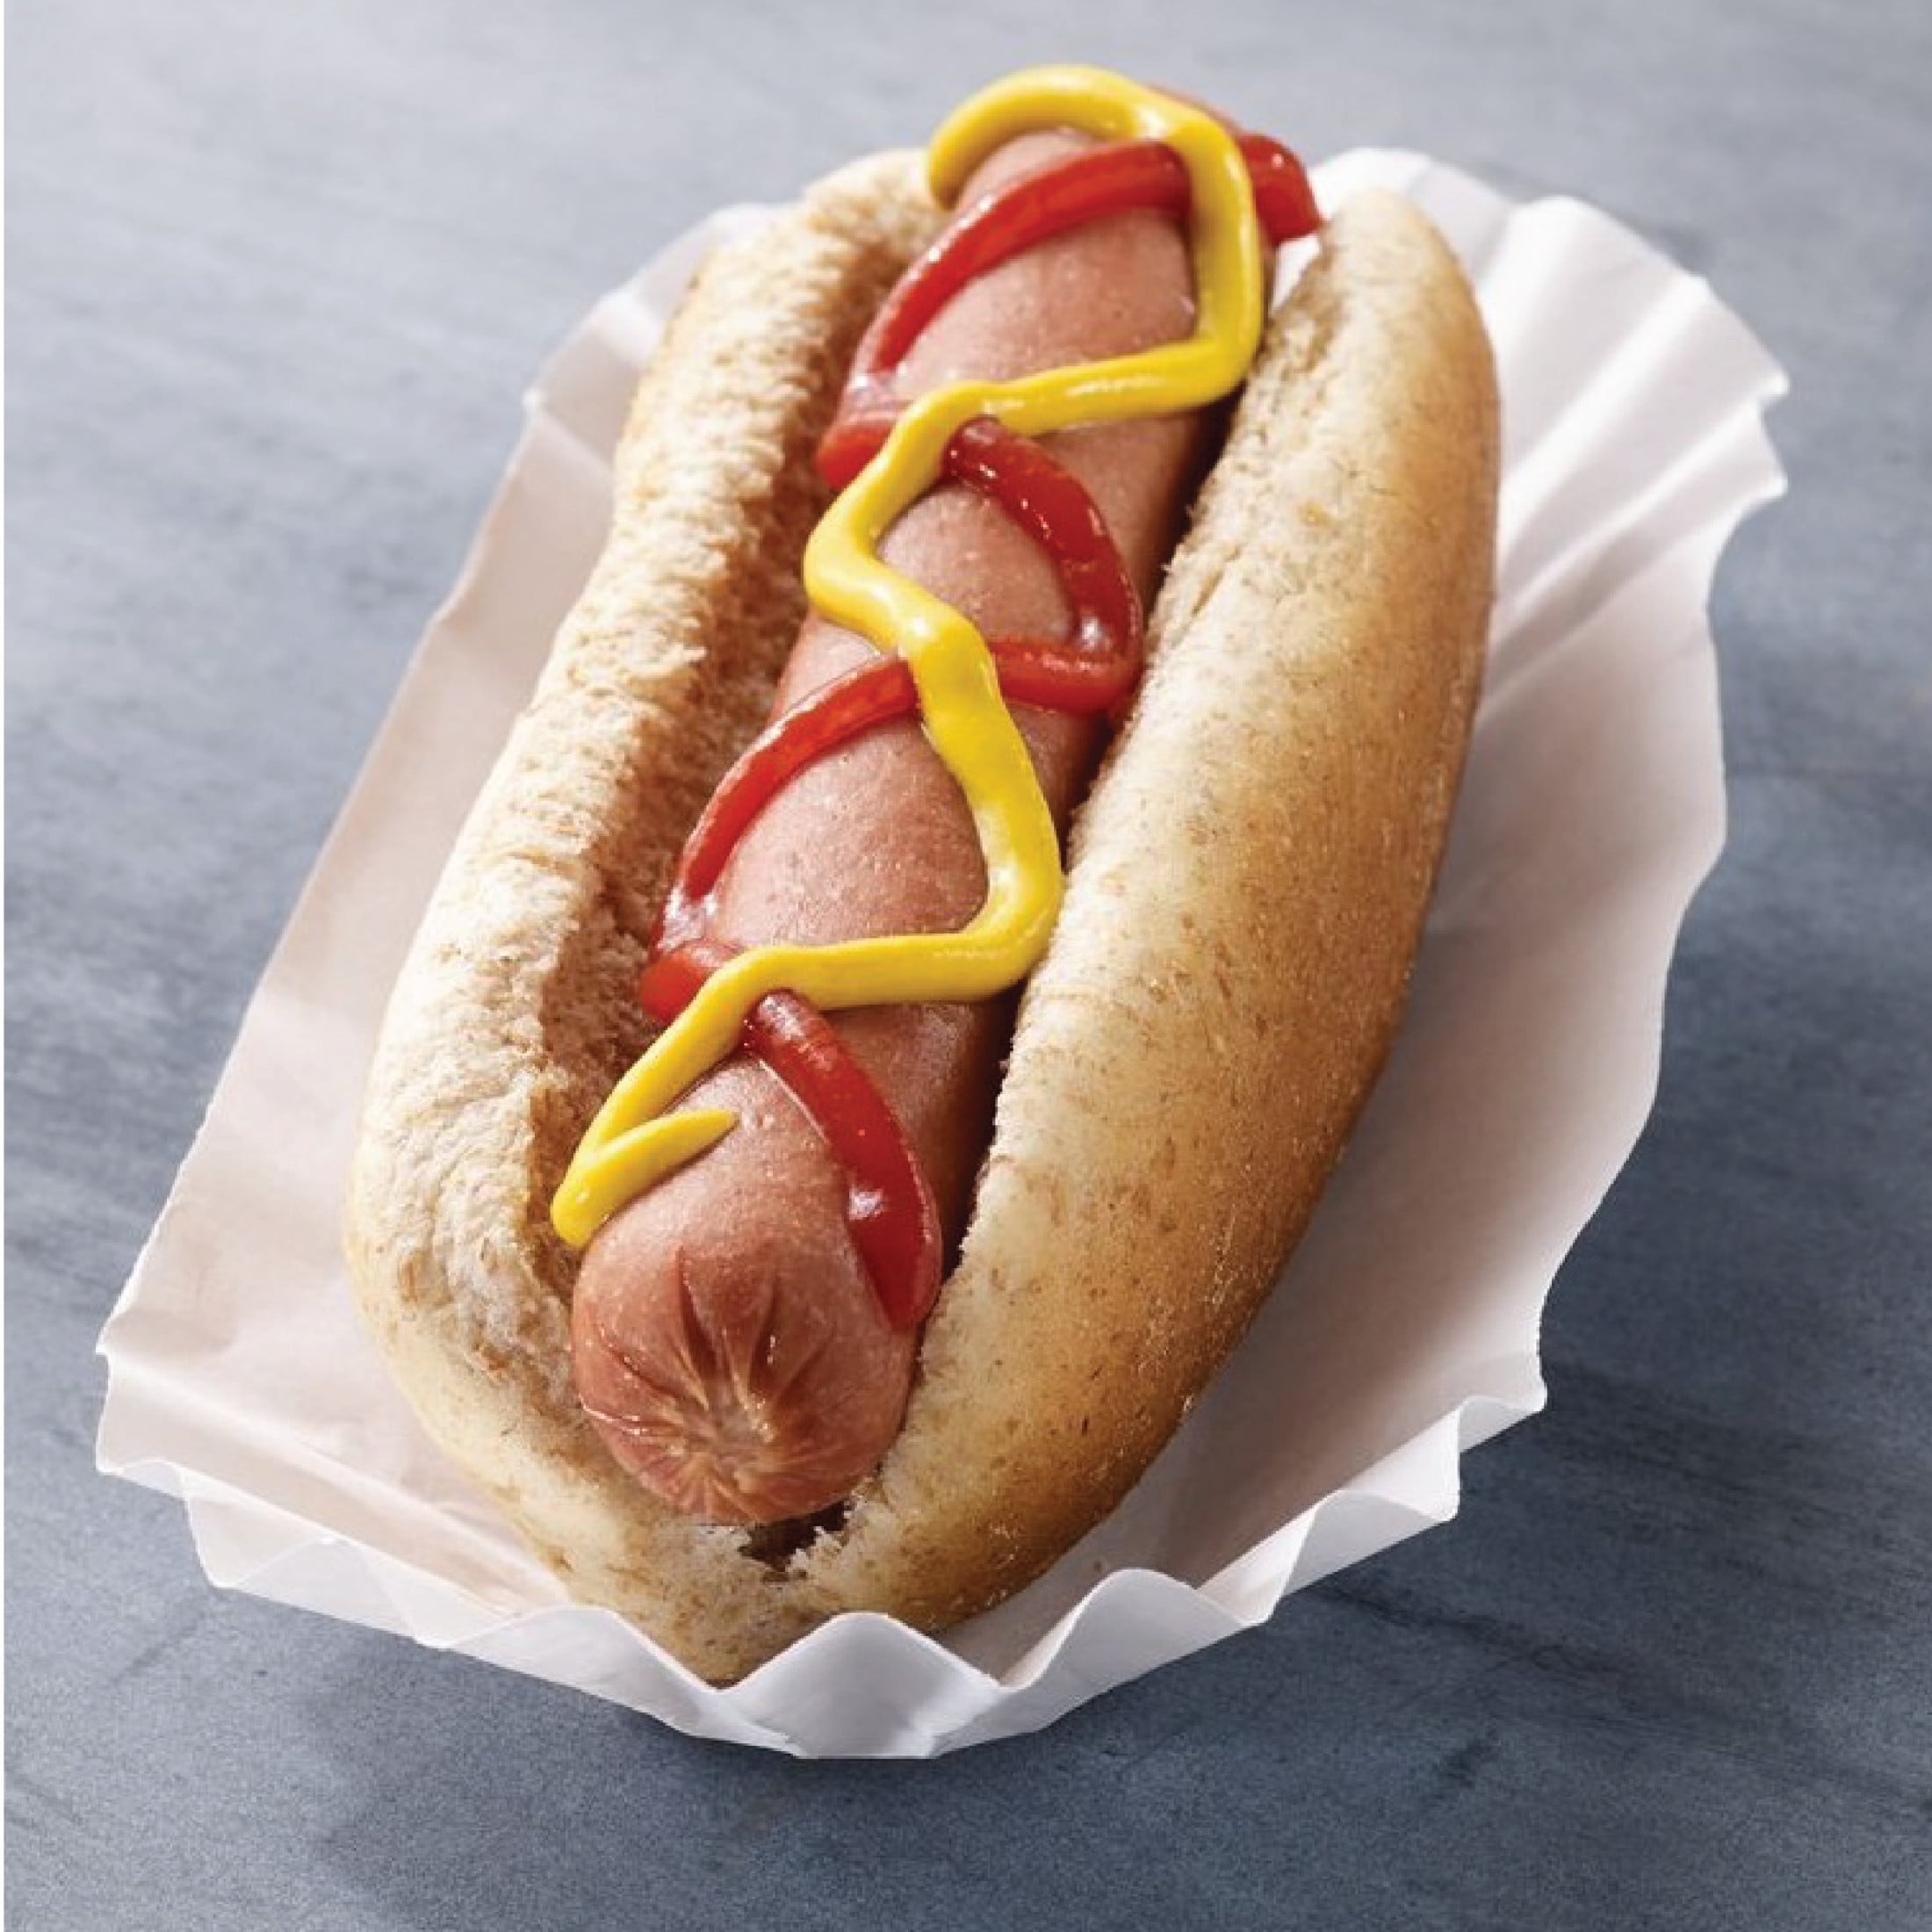 Ball Park® Bun Length Smoked White Meat Turkey Hot Dogs, 8 ct / 14